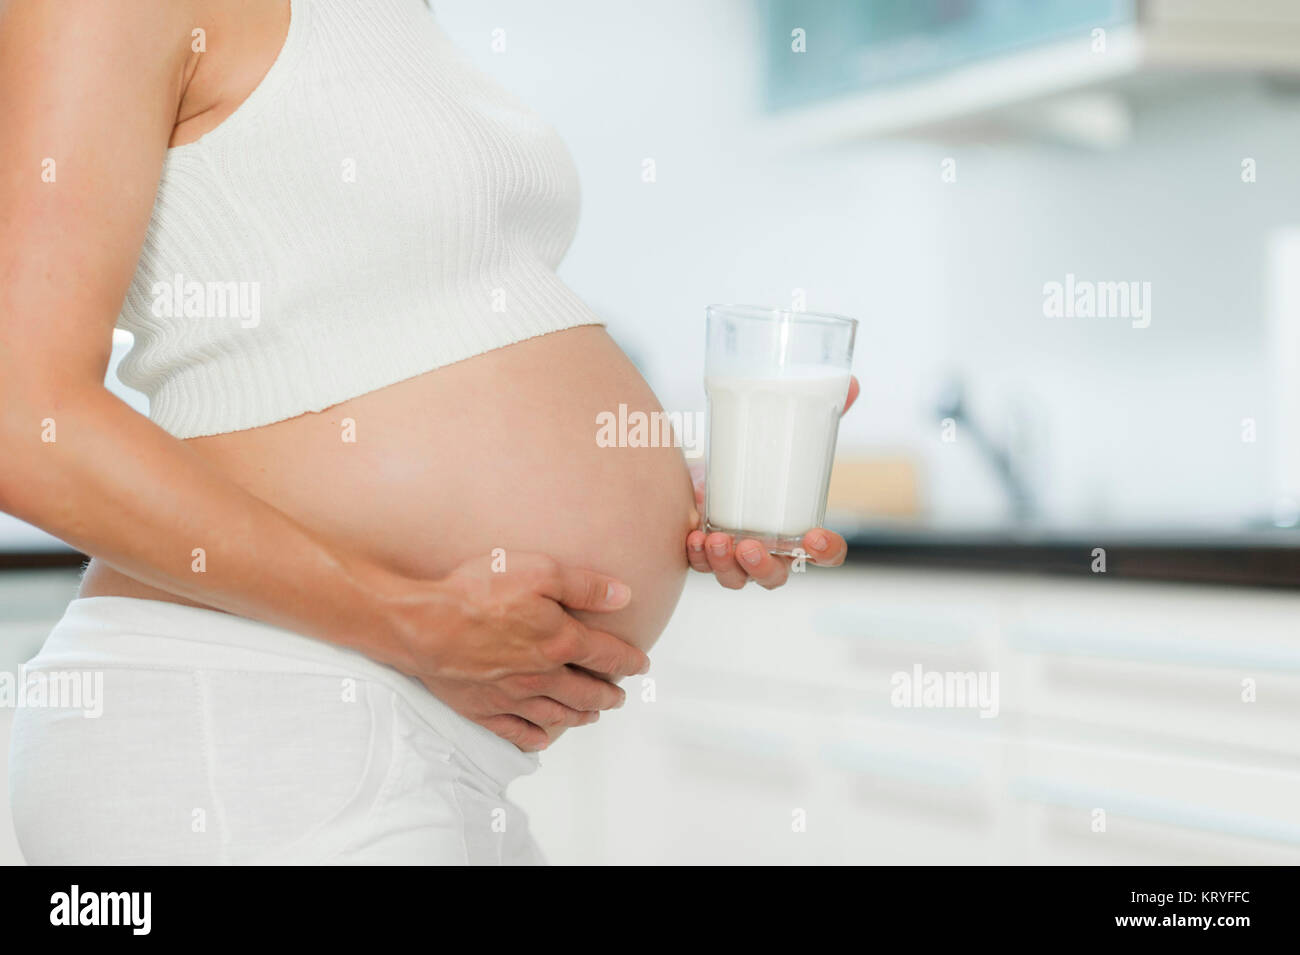 Schwangere Frau mit einem Glas Milch - pregnant woman with a glass of milk Stock Photo